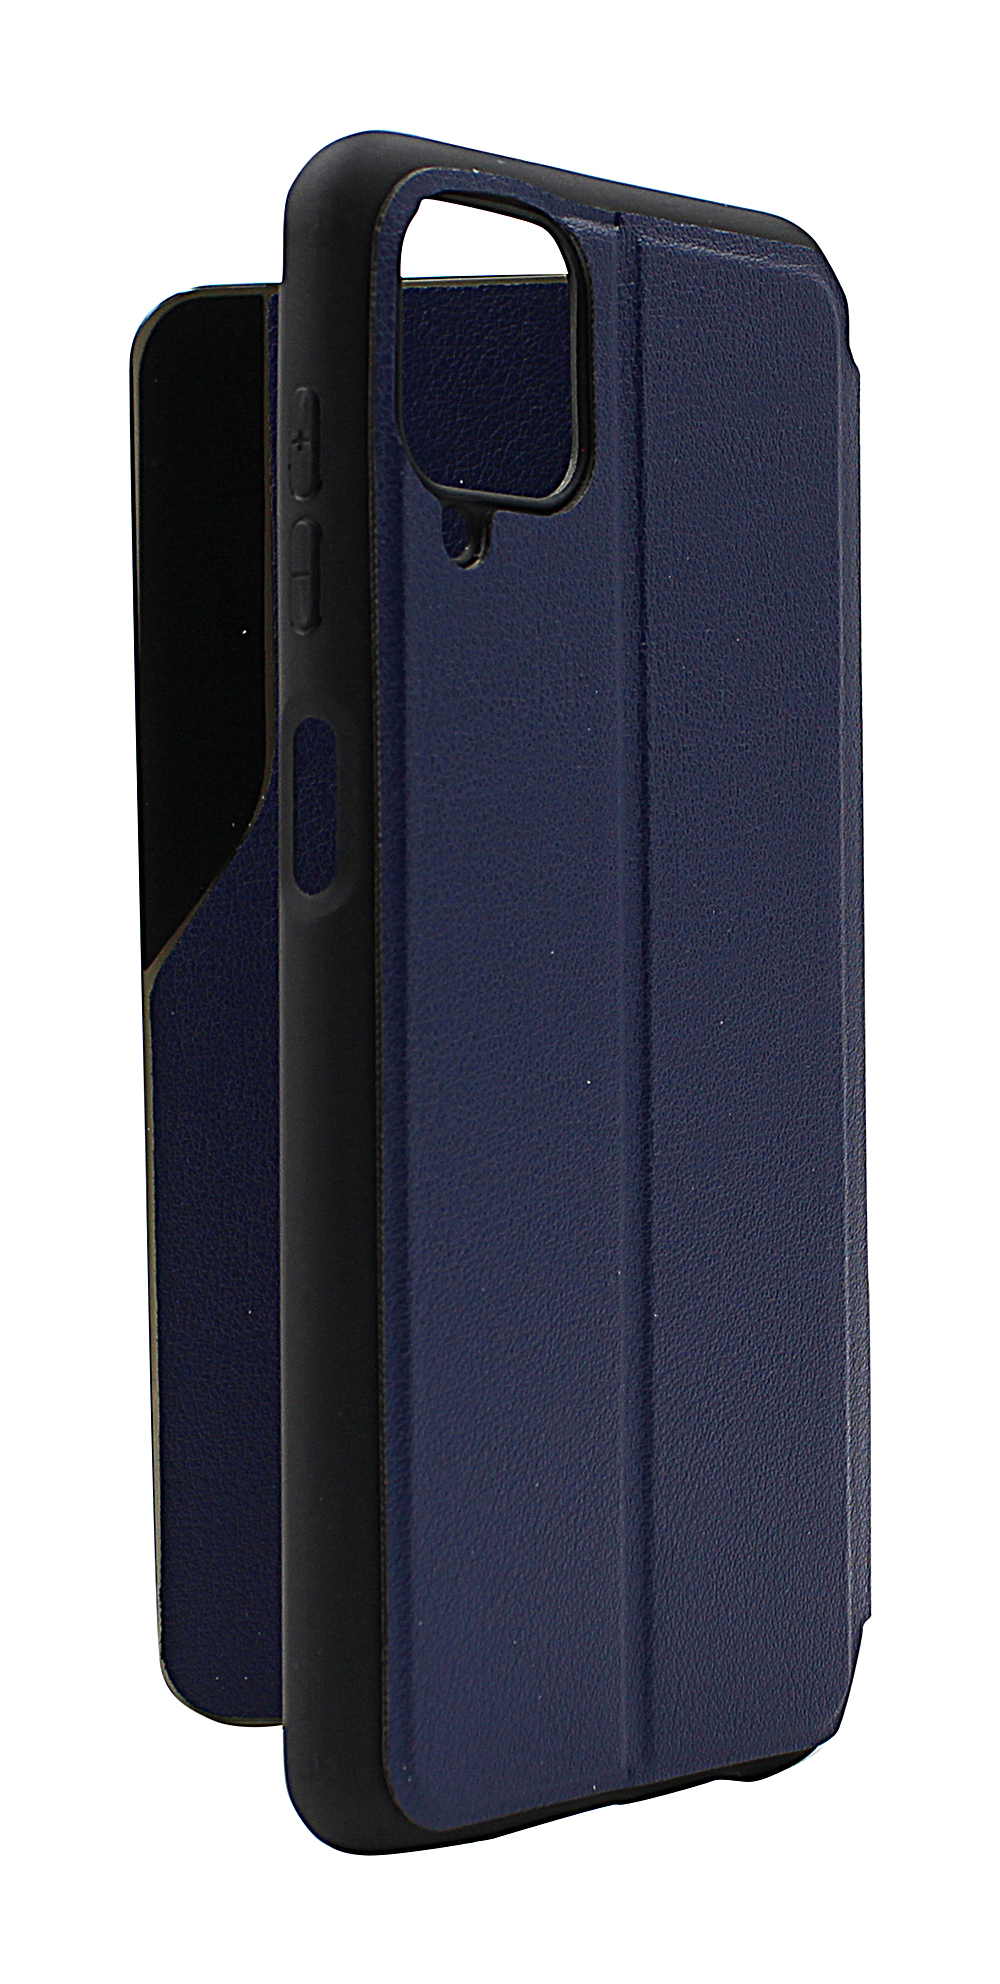 Smart Flip Cover Samsung Galaxy A12 (A125F/DS)